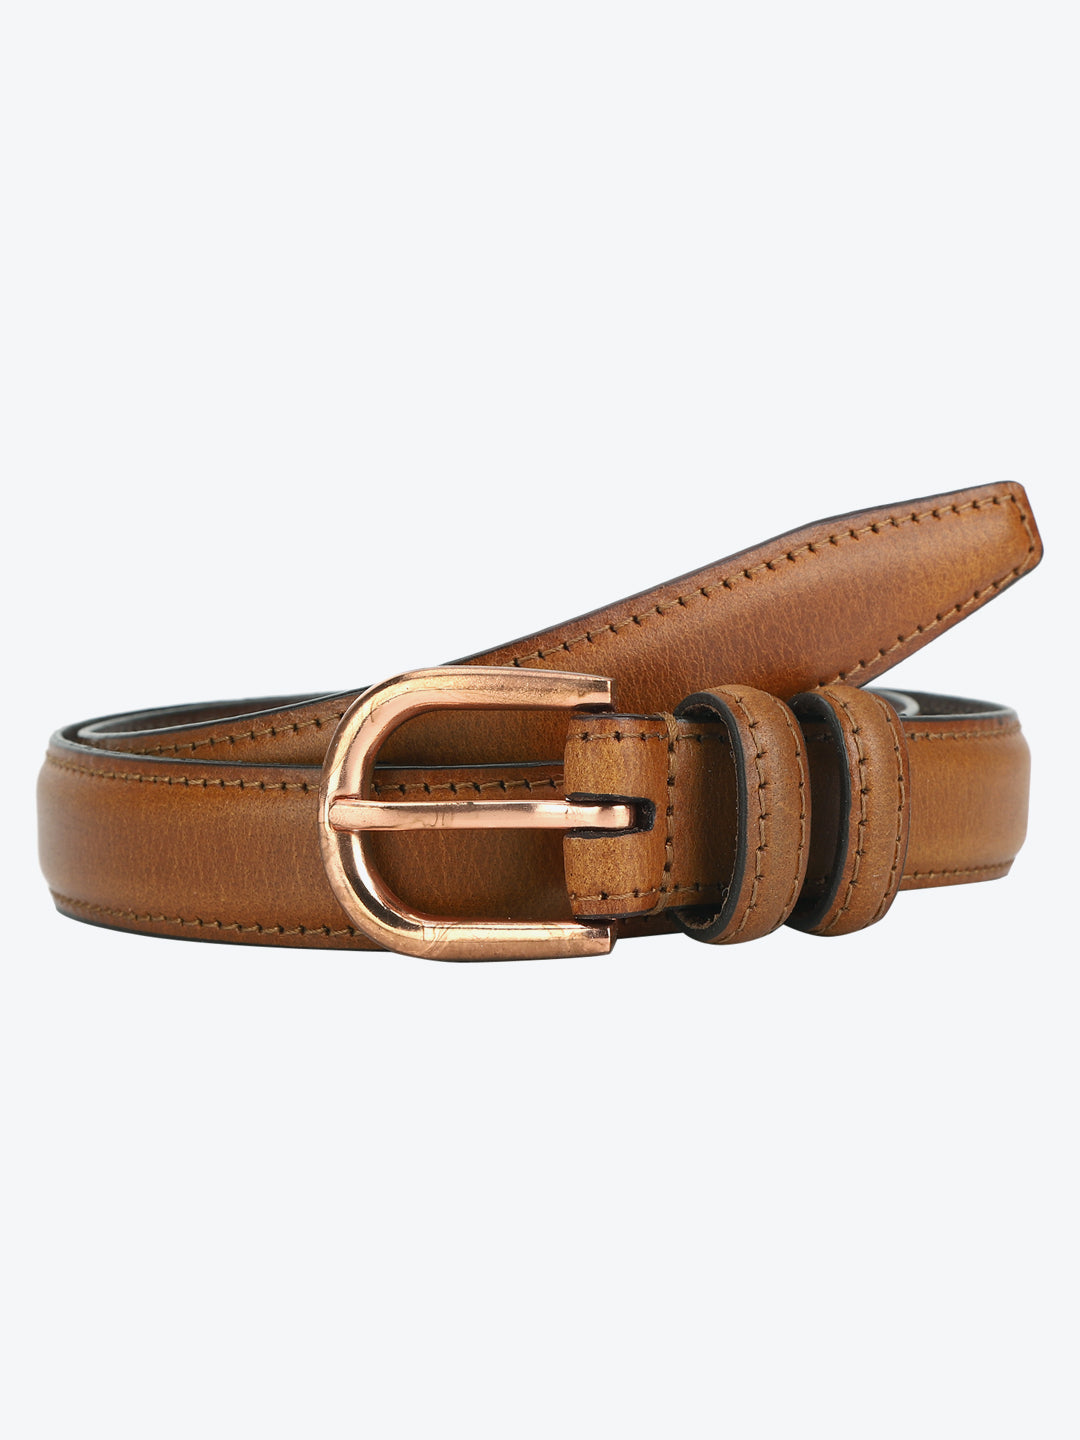 Genuine leather tan profile belt Aditi Wasan